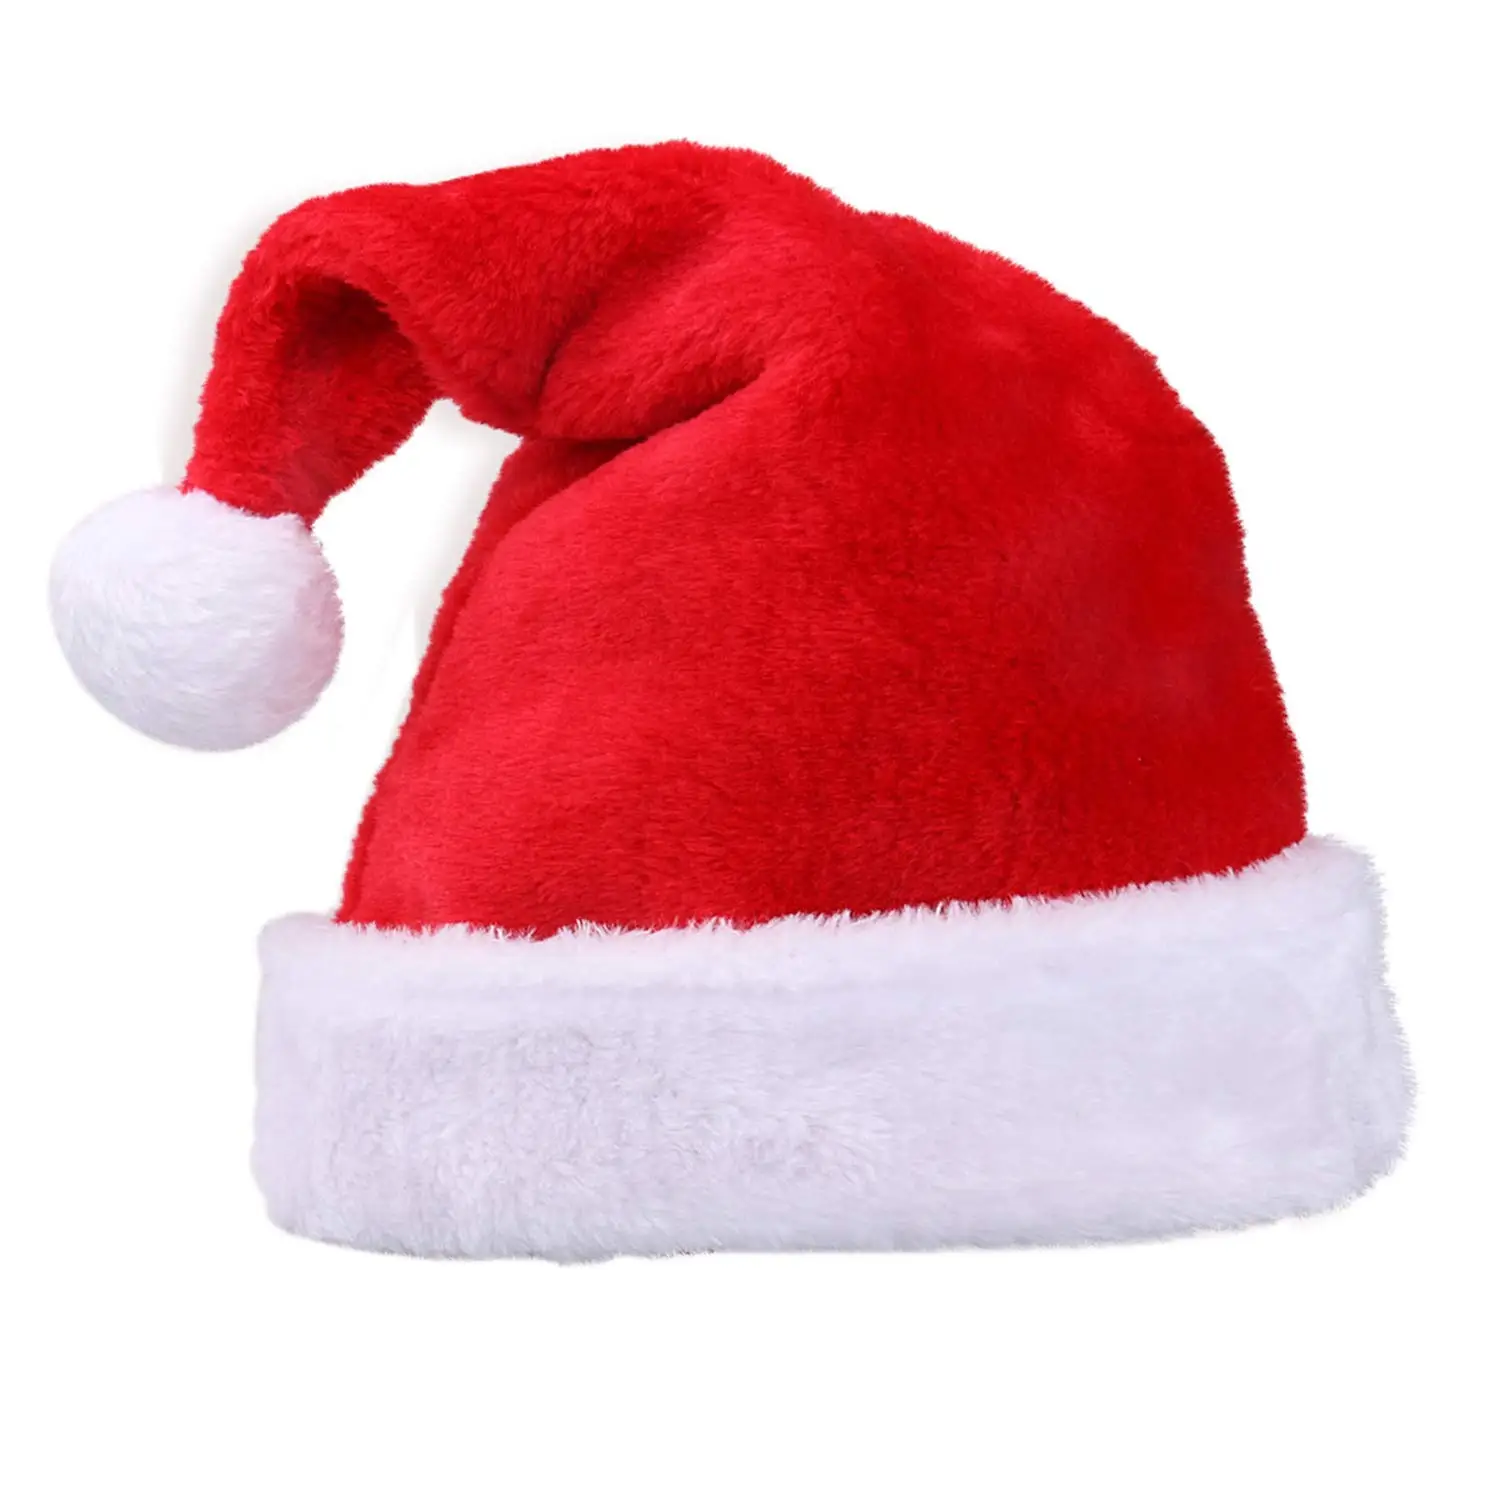 where to buy cheap santa hats